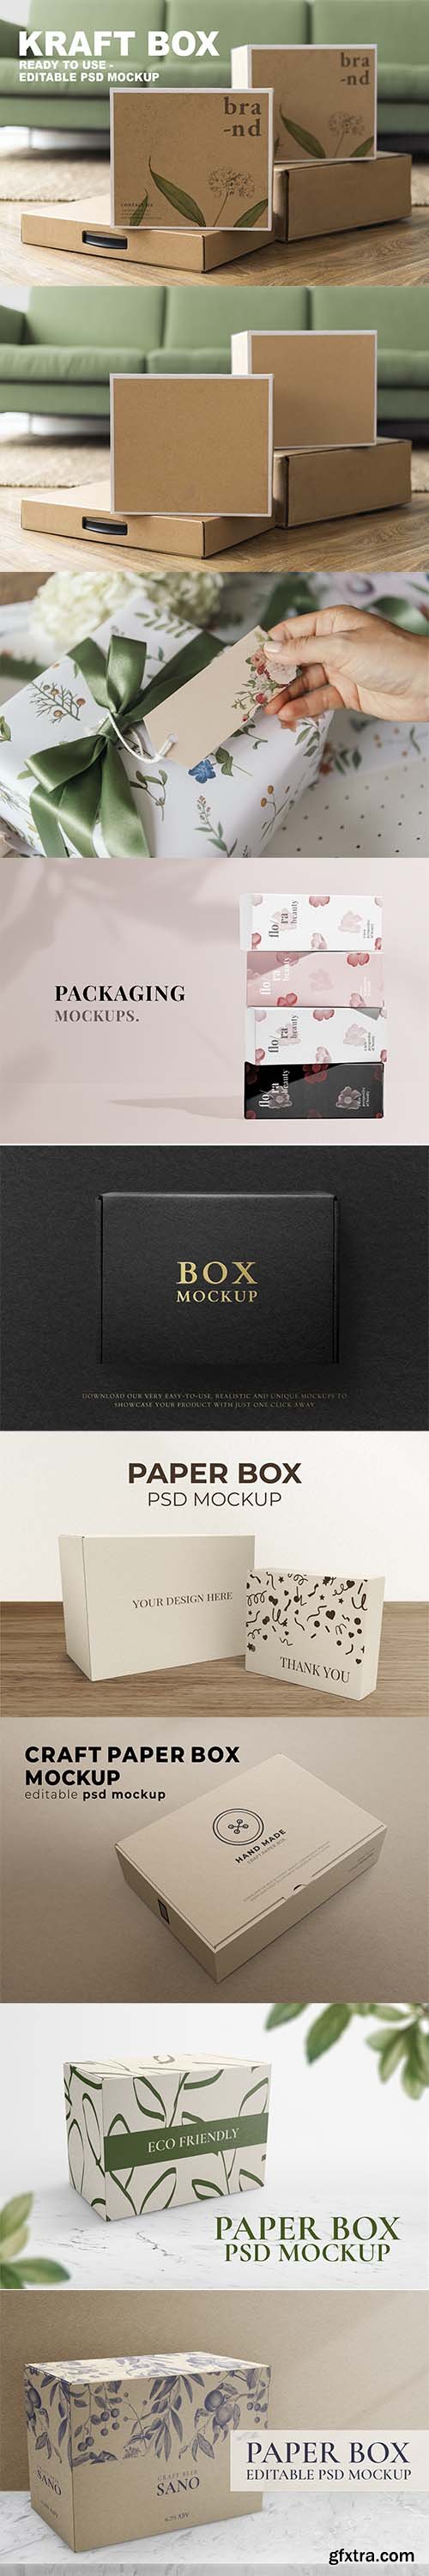 Paper box mockup